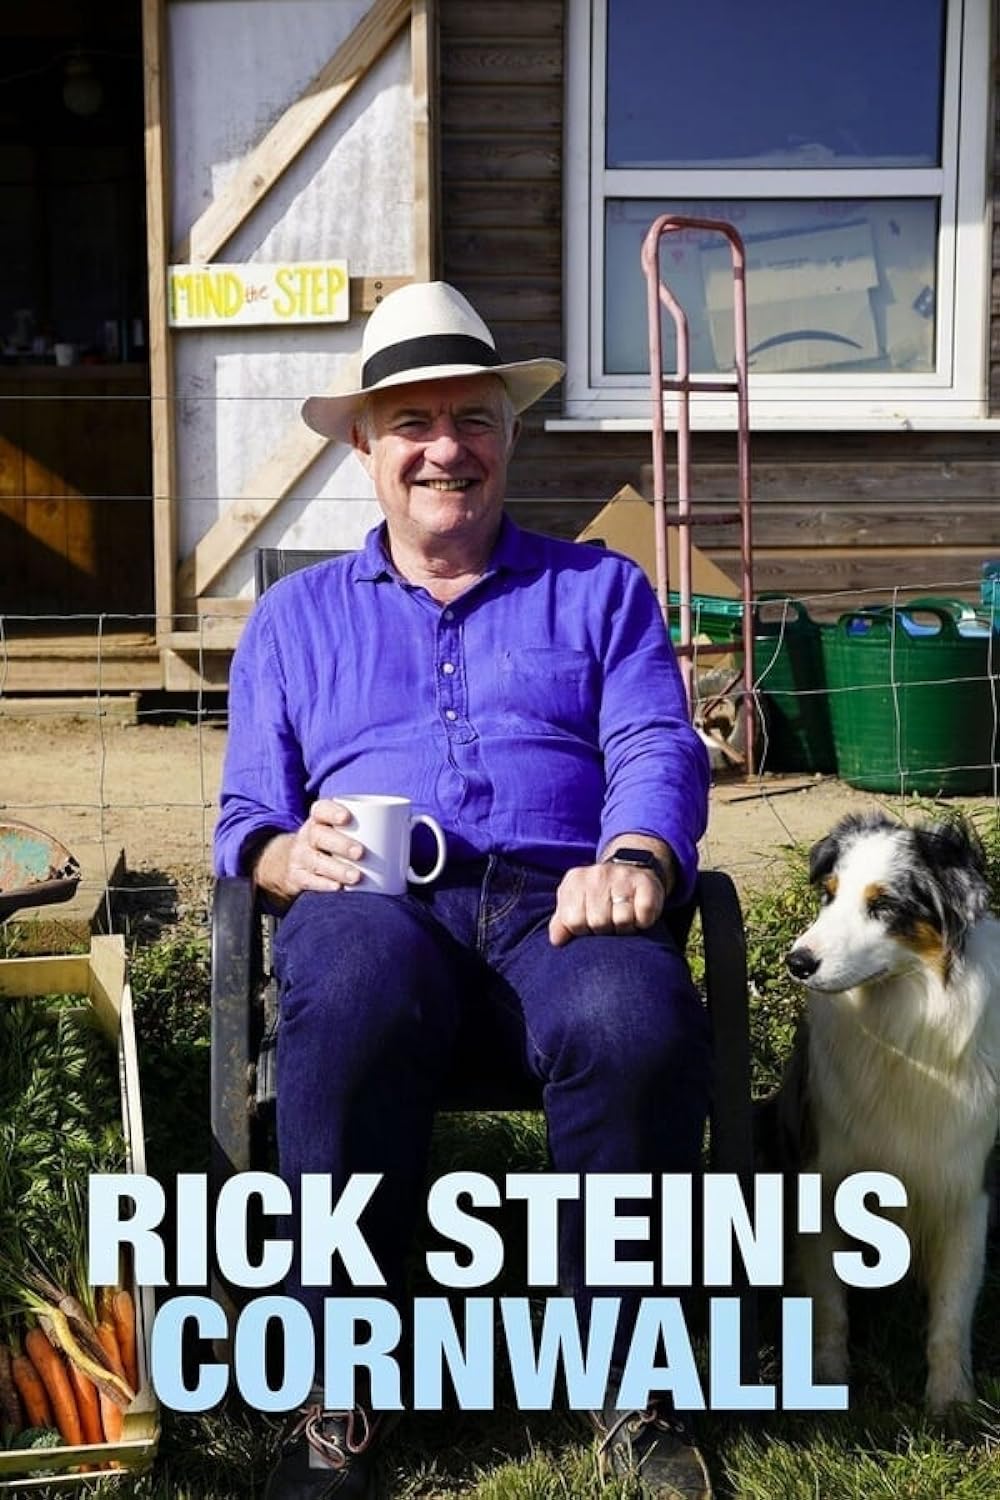 Rick Stein's Cornwall